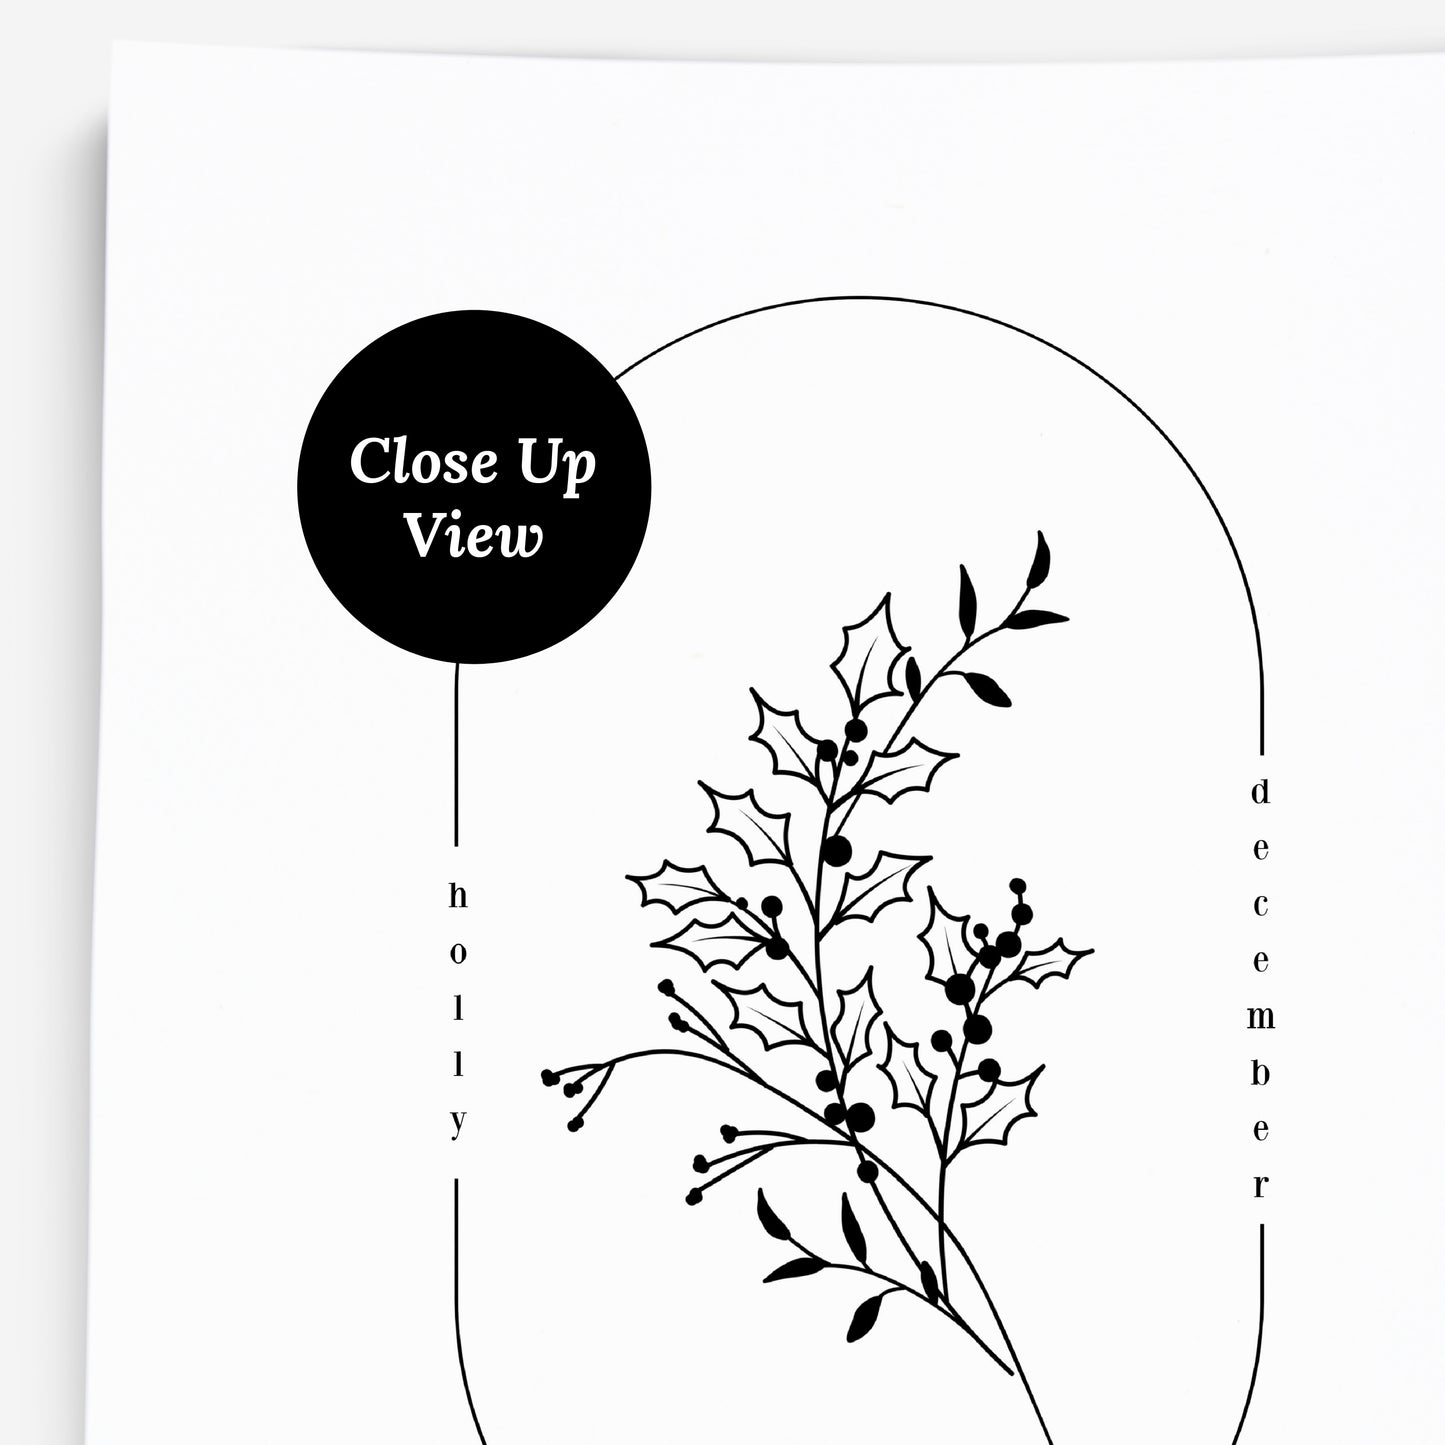 December Birth Flower Holly | Oval Frame Simple Art Printable | Digital Wall Decor